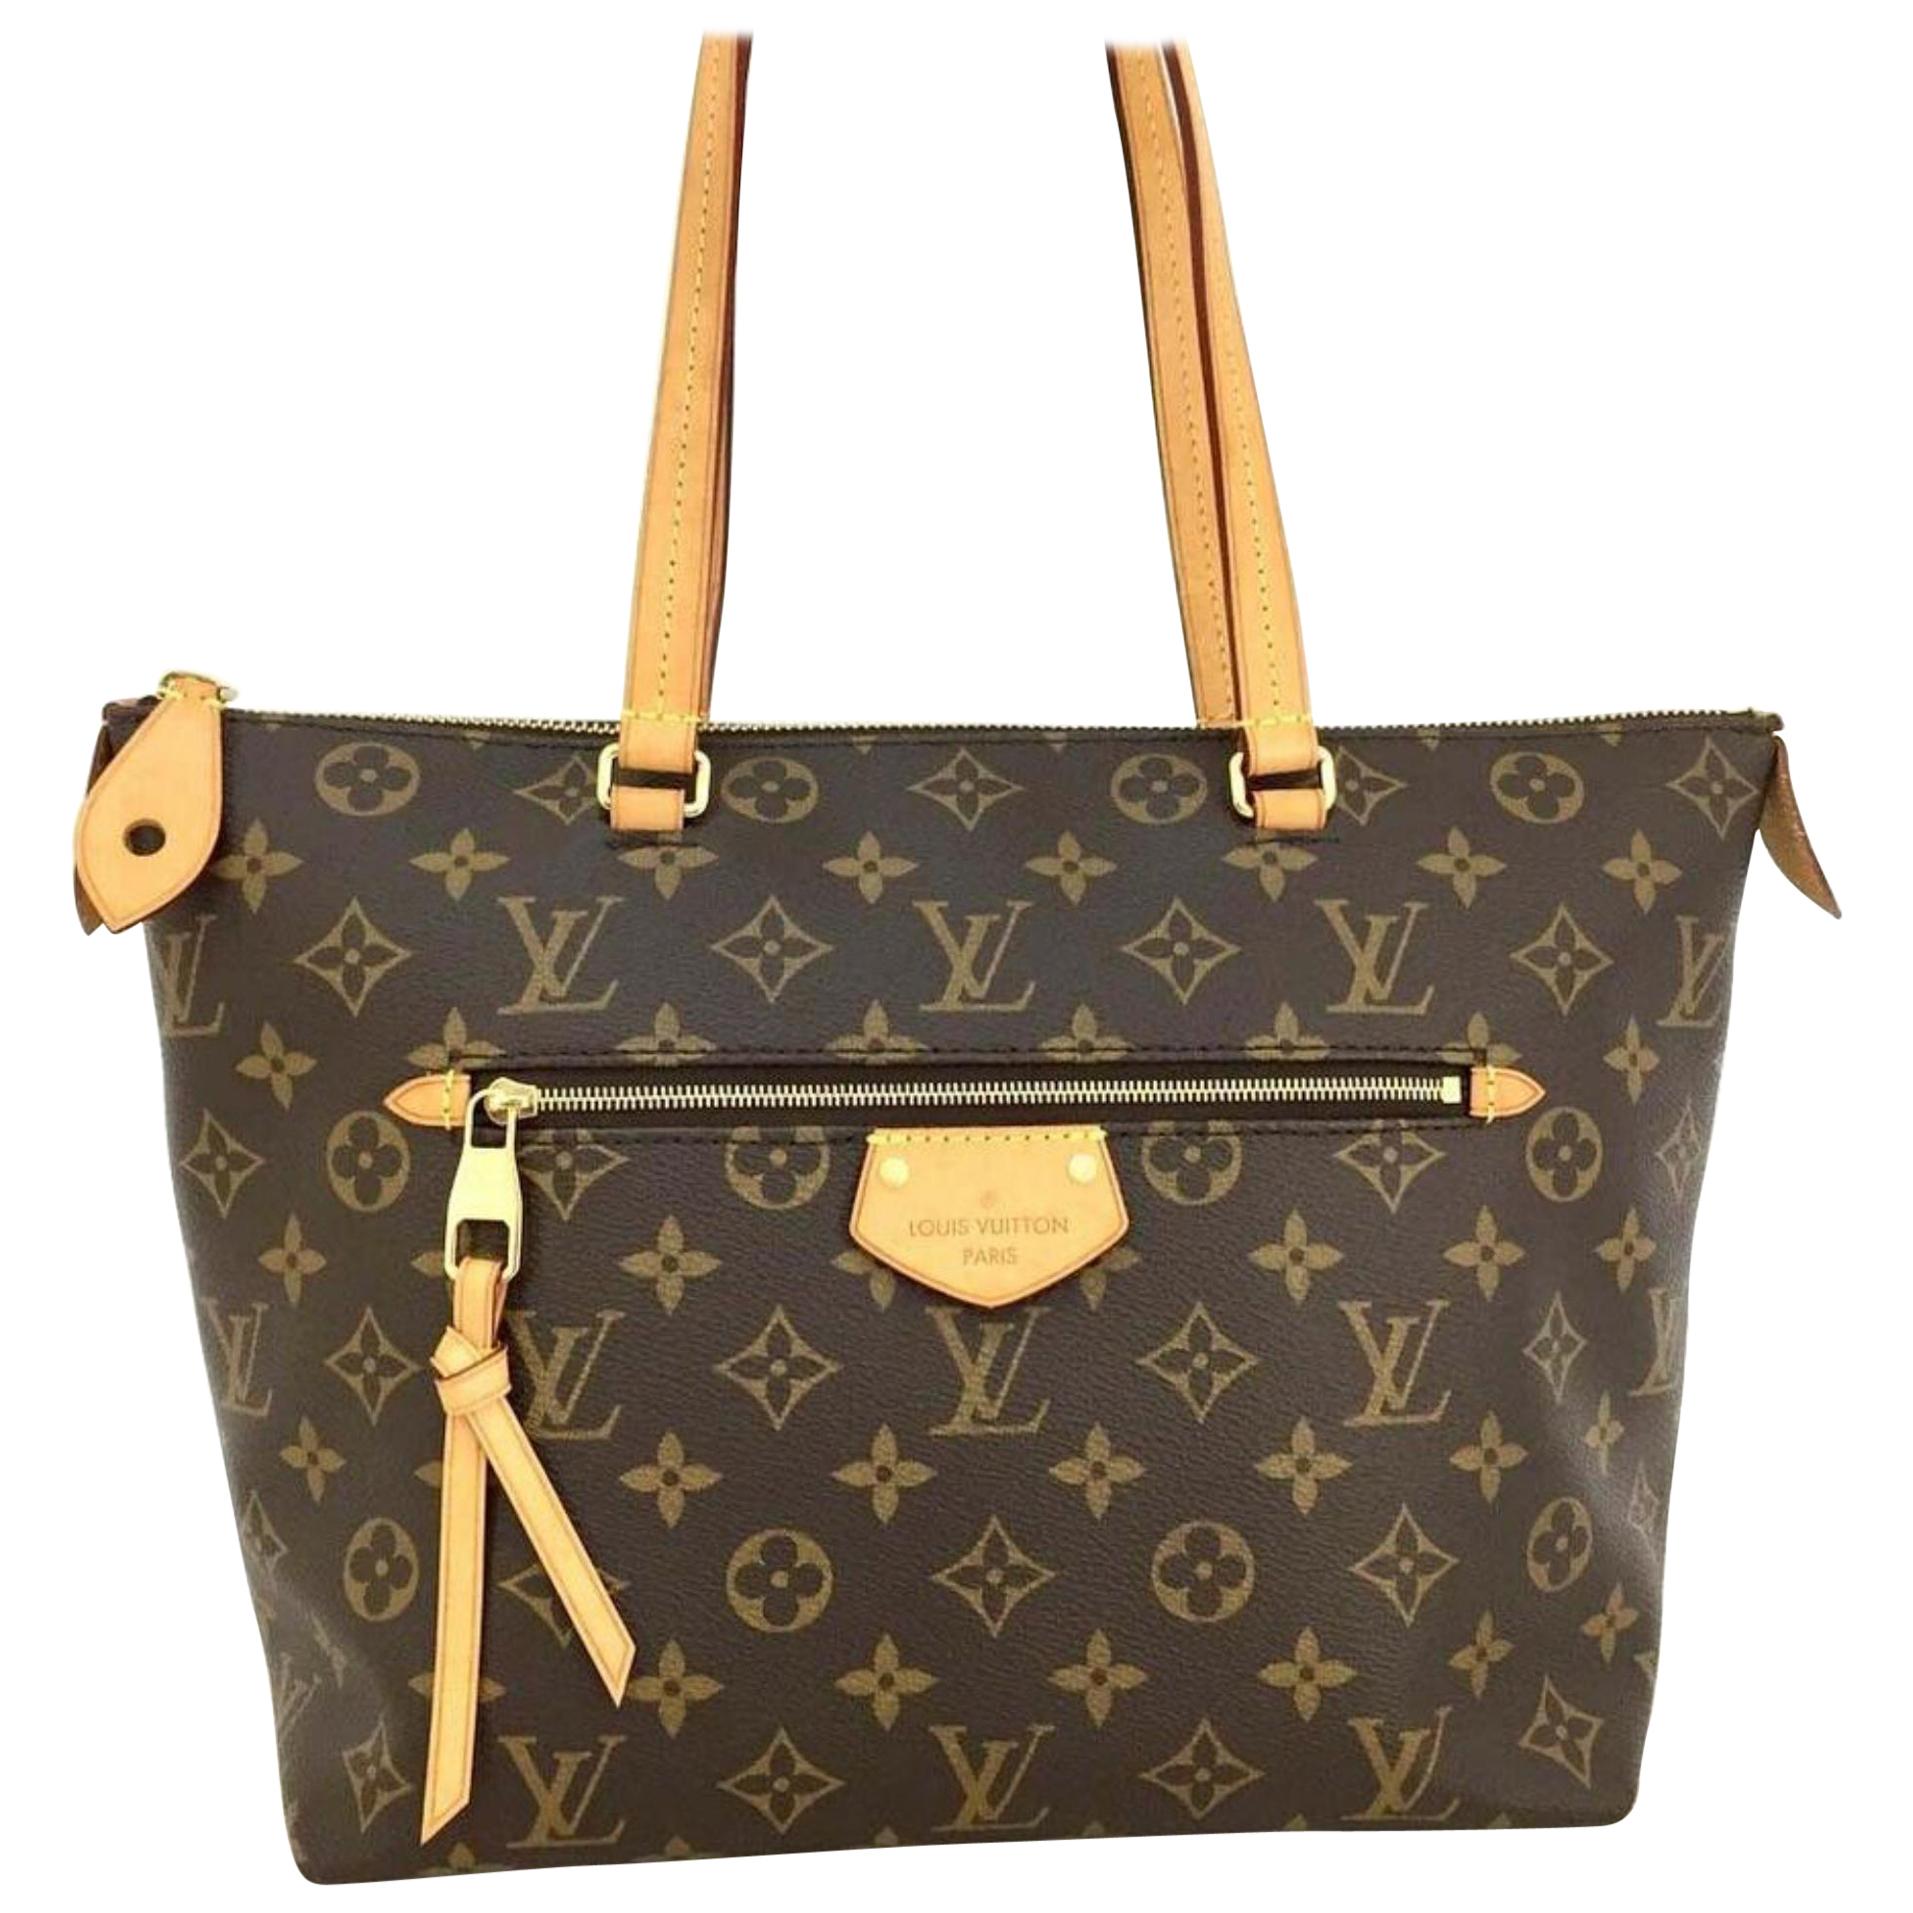 Louis Vuitton Iena Monogram Pm Zip Tote 870371 Brown Coated Canvas Shoulder Bag For Sale